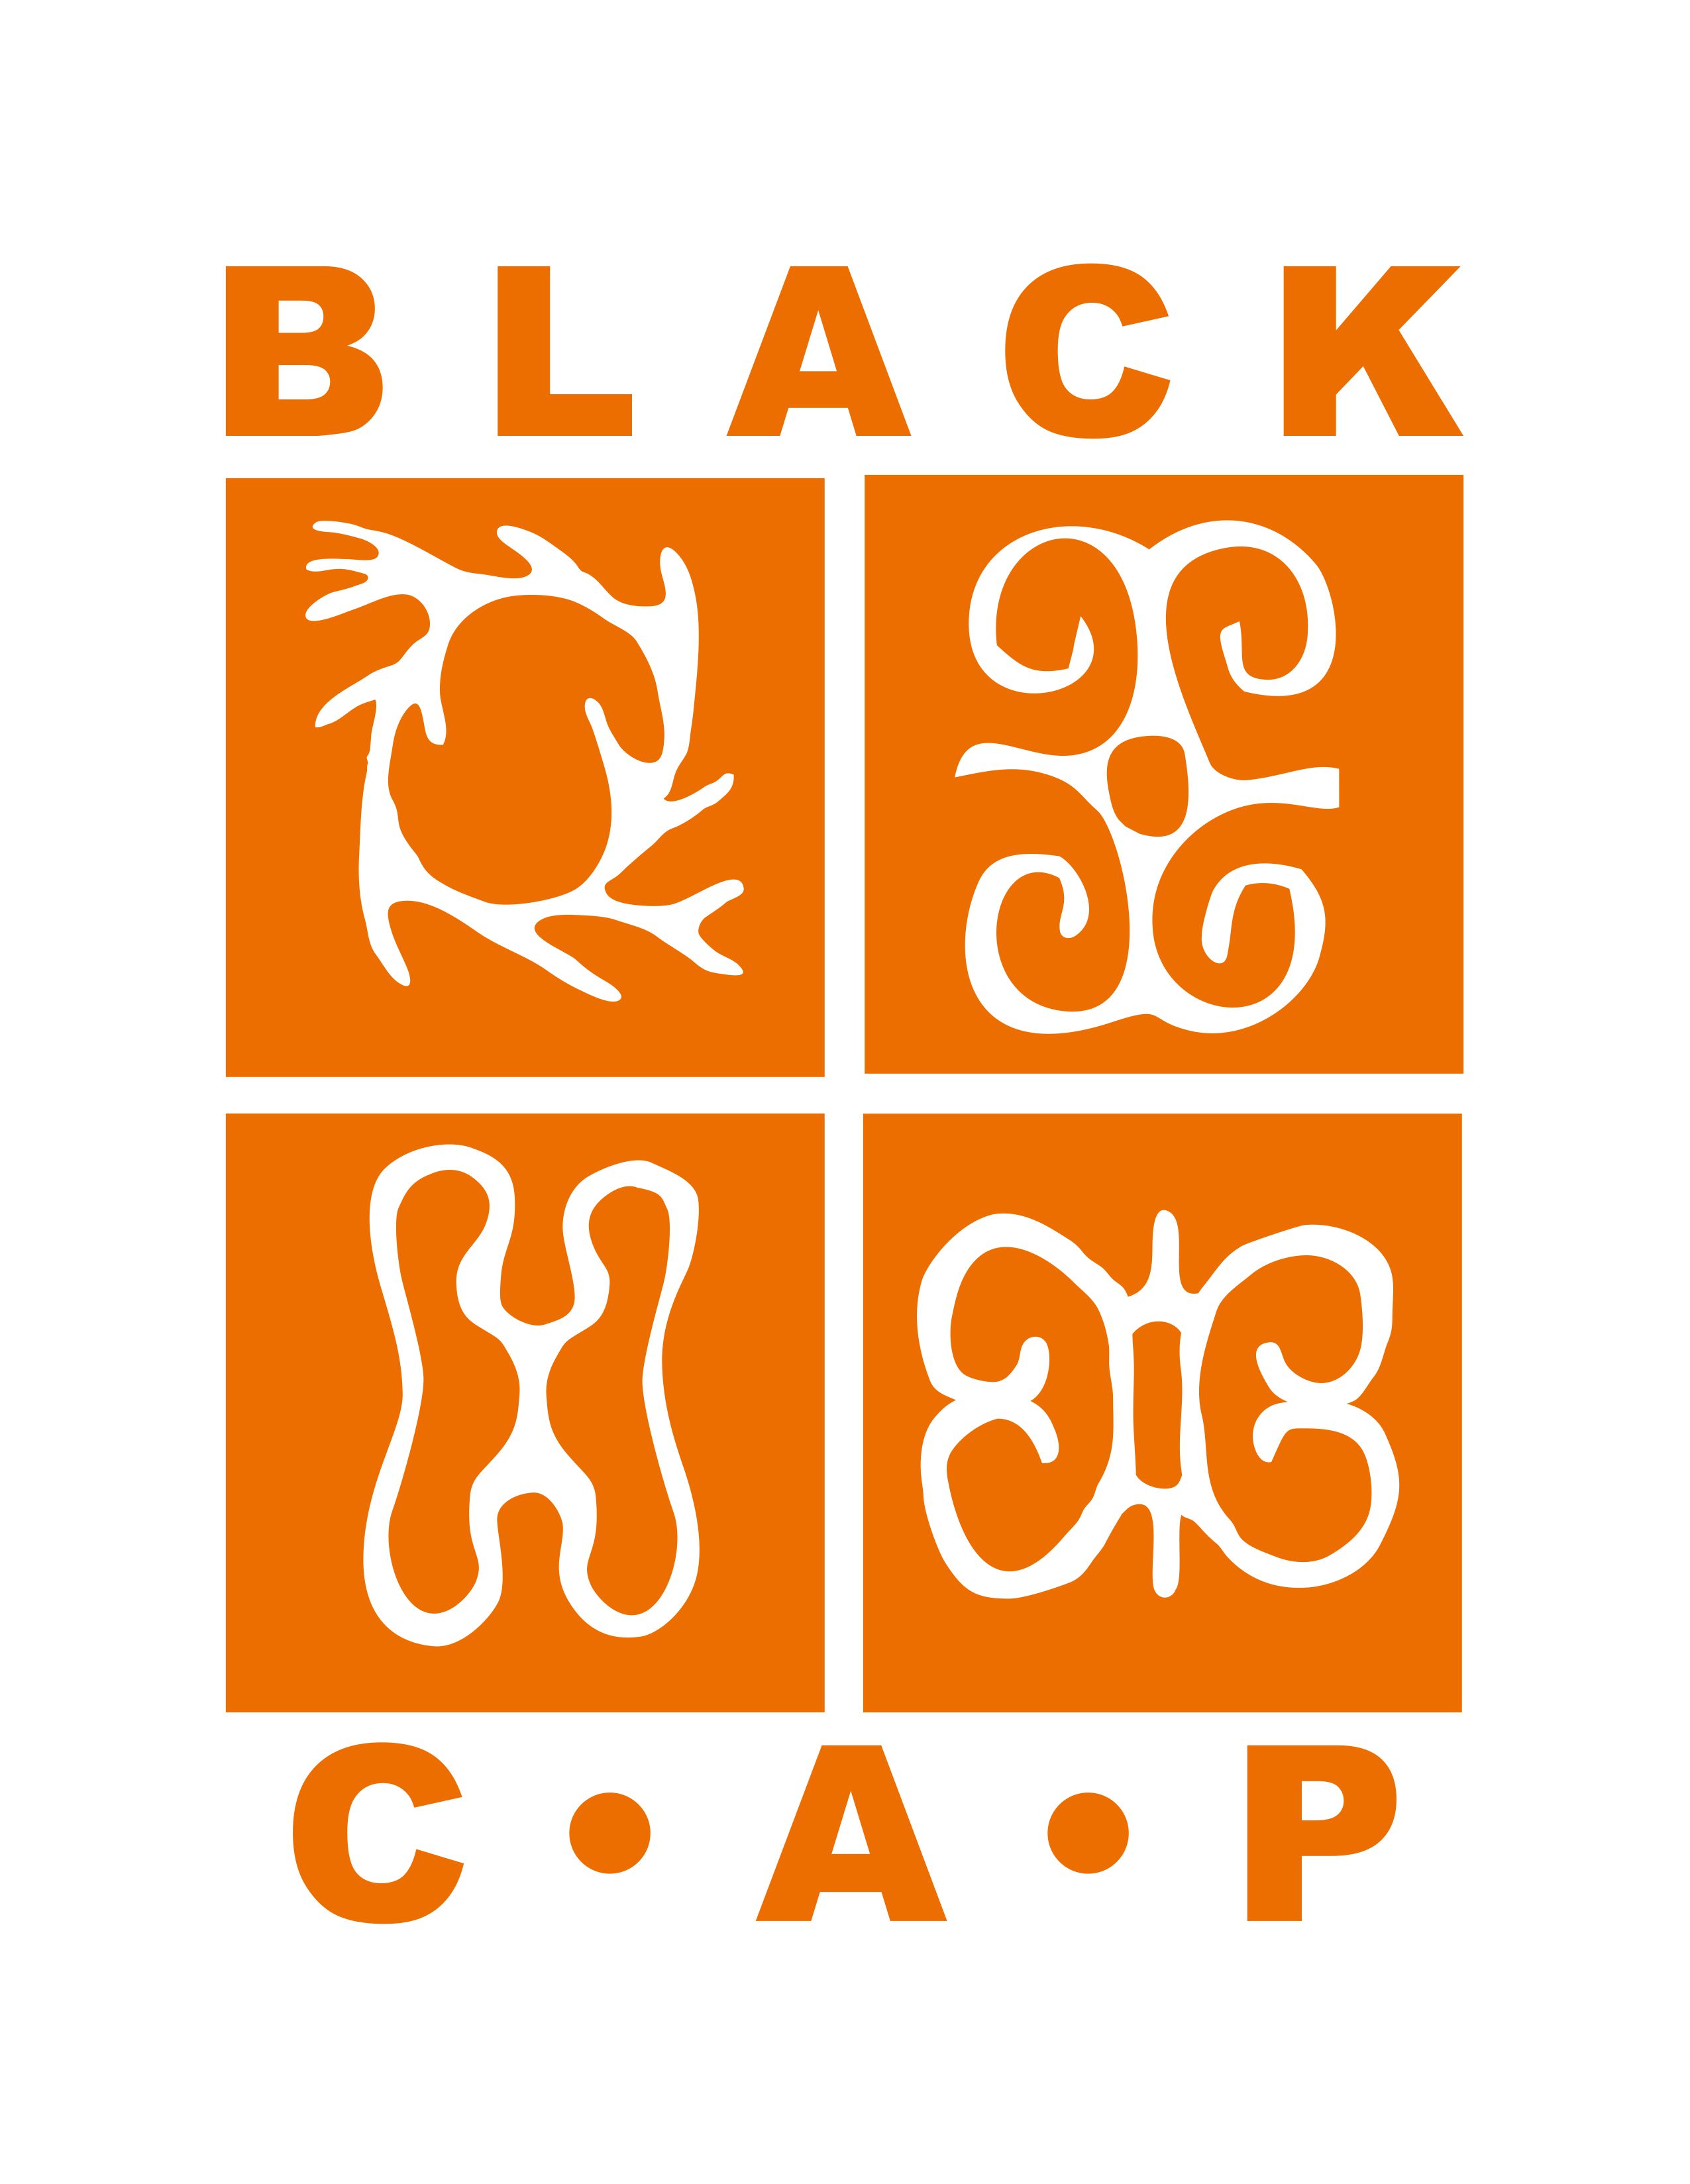 Black CAP logo in orange